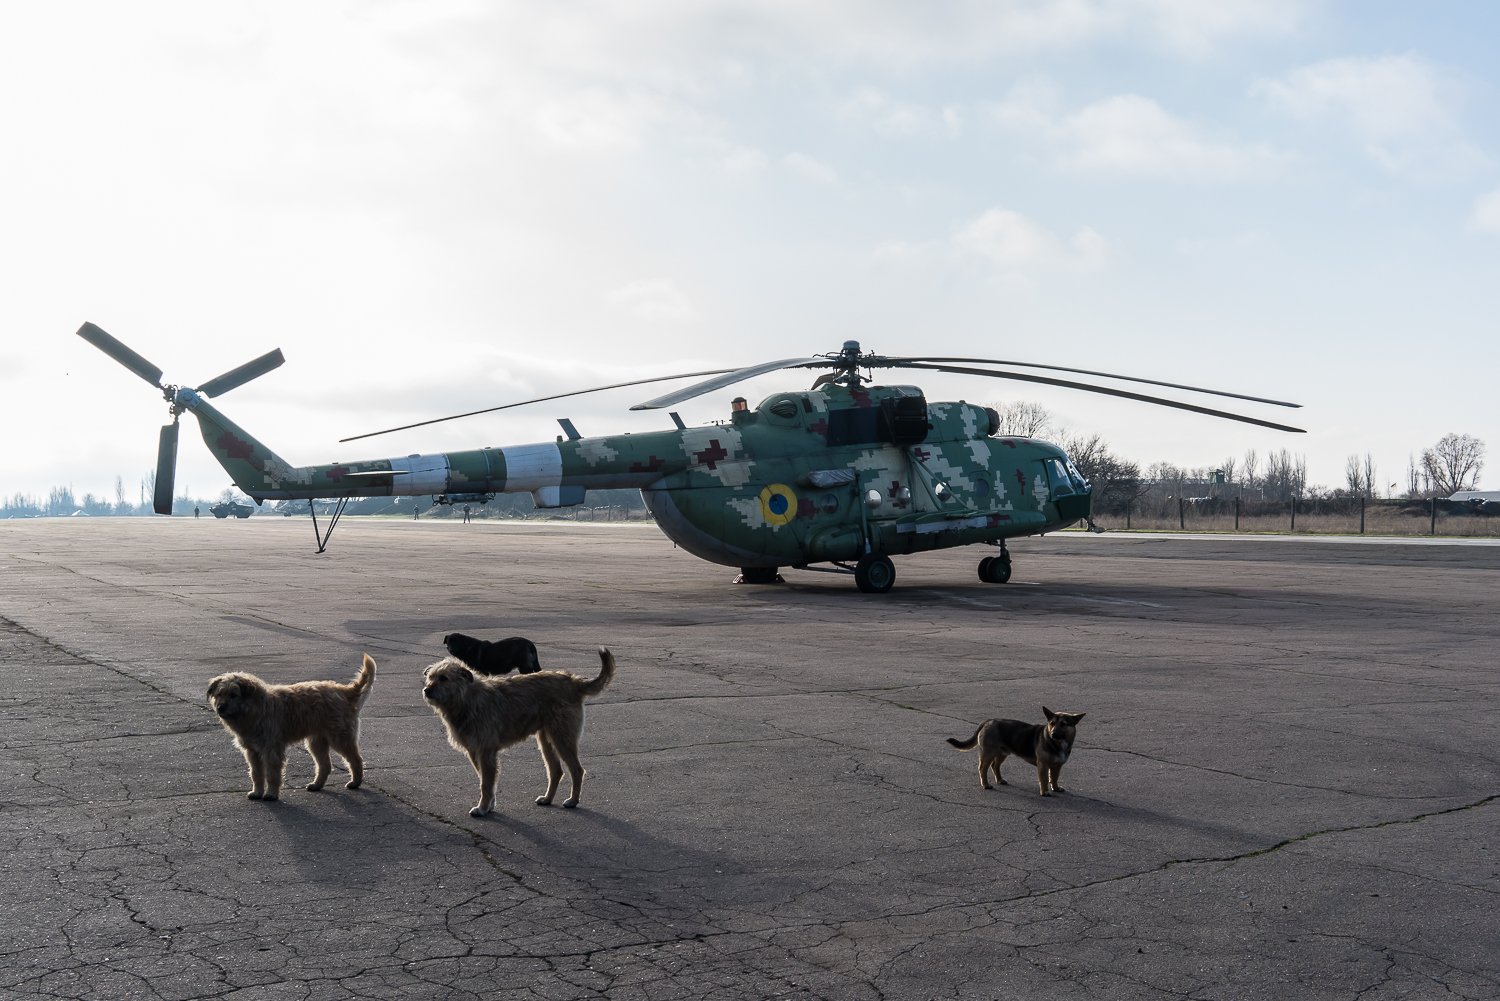  A military helicopter at the Kramatorsk airport on Friday, April 16, 2021 in Kramatorsk, Ukraine. 